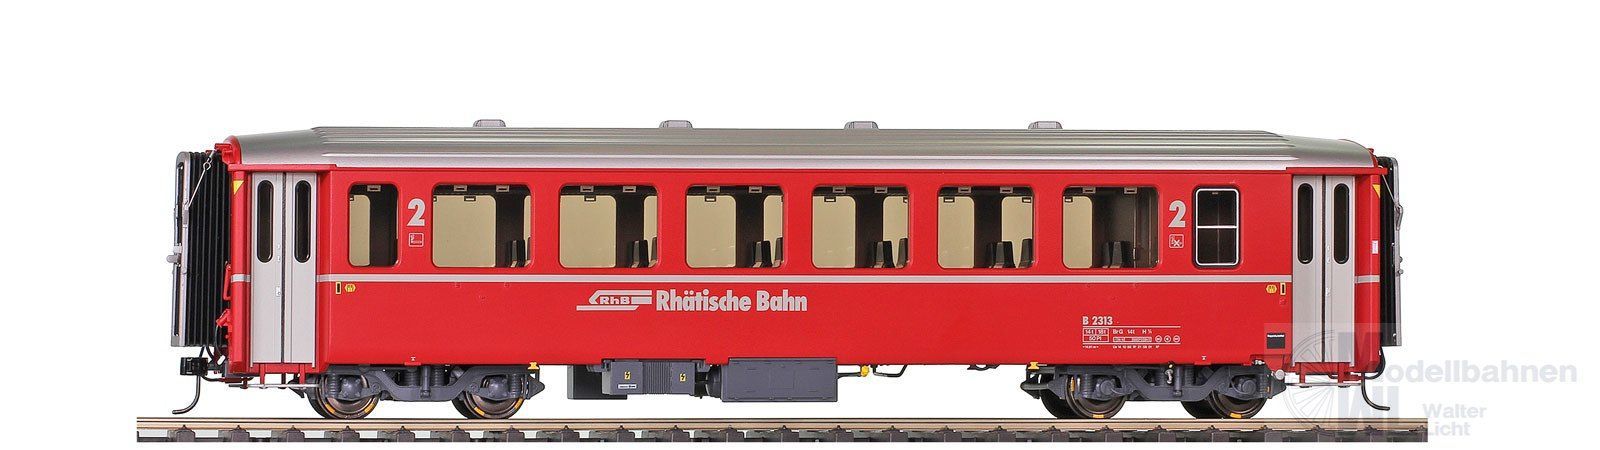 Bemo 9555143 - Einheitswagen I RhB B 2313 refit rot mit Logo 0m